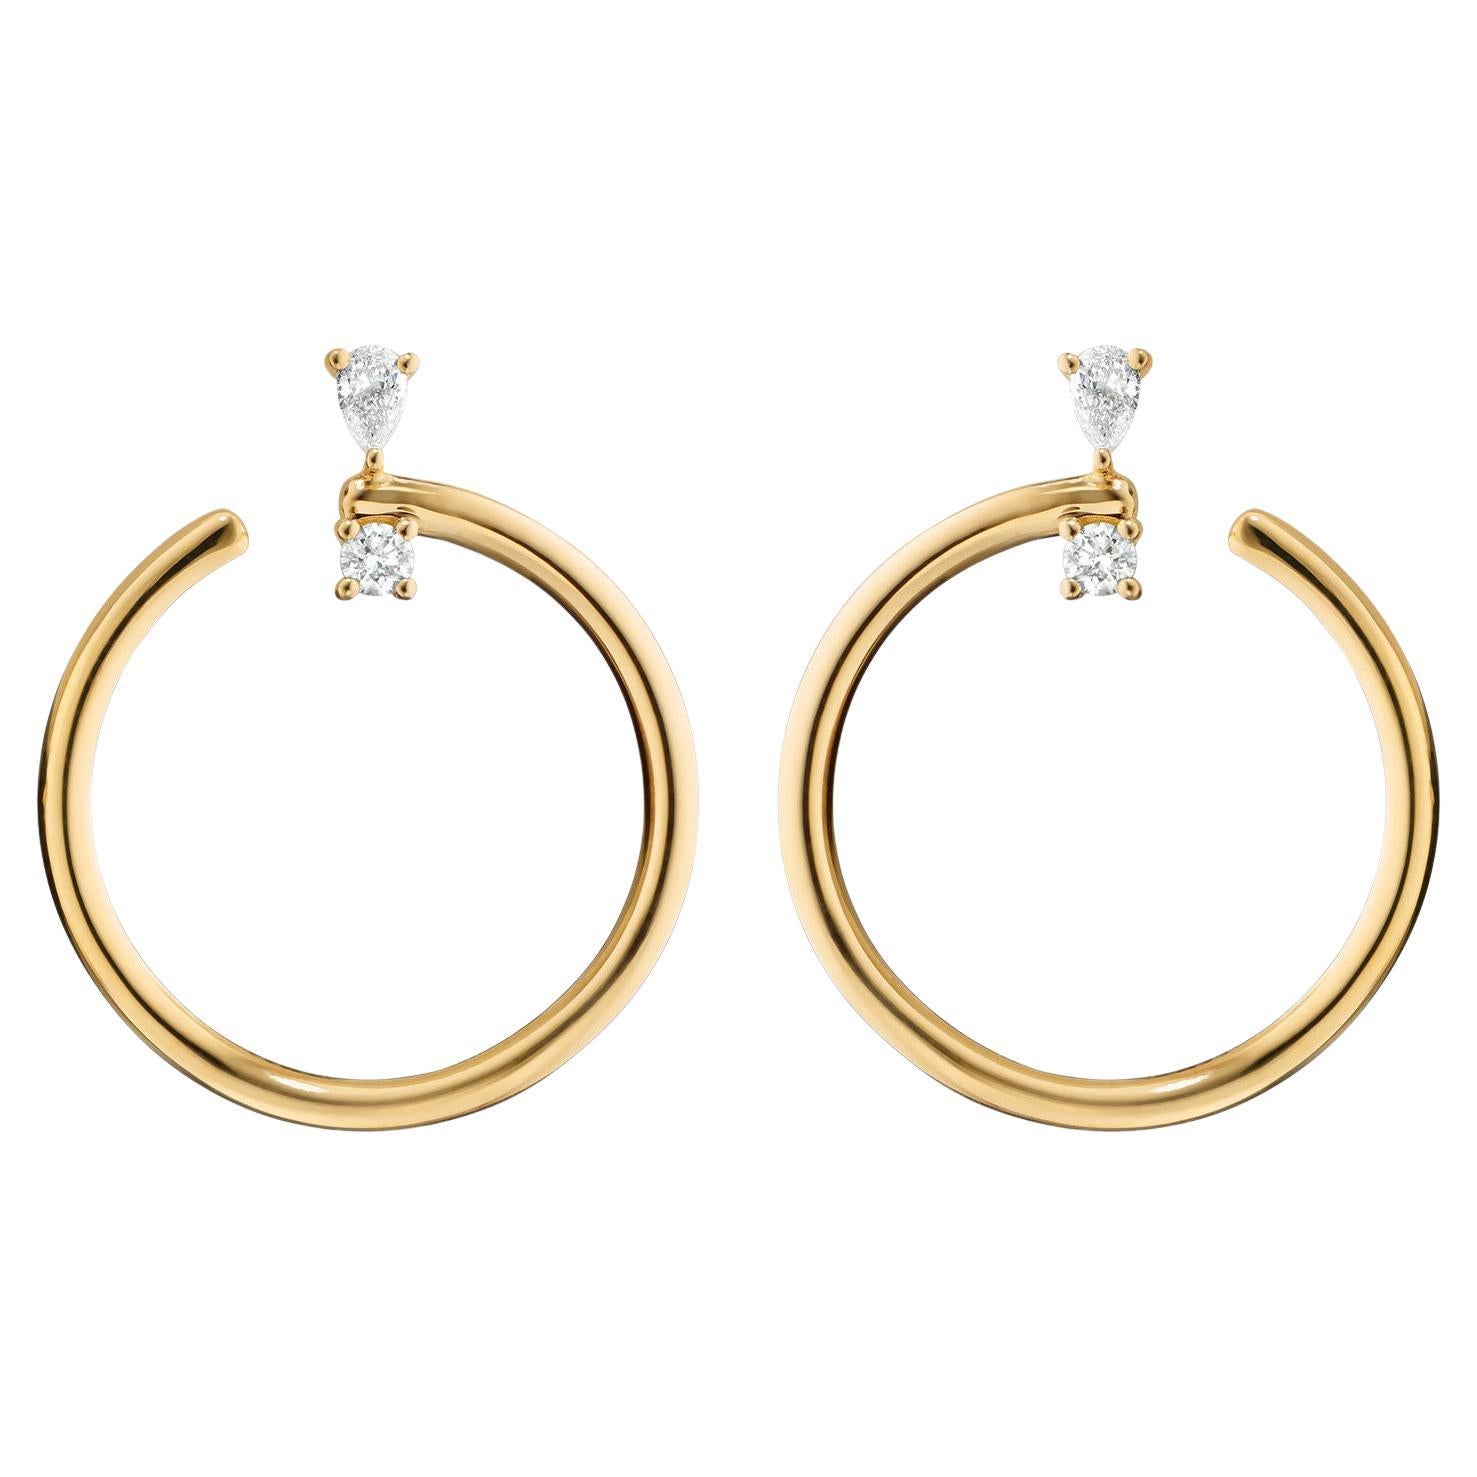 Monica Rich Kosann 18K Gold "Galaxy" Large Hoop Earrings with Diamonds